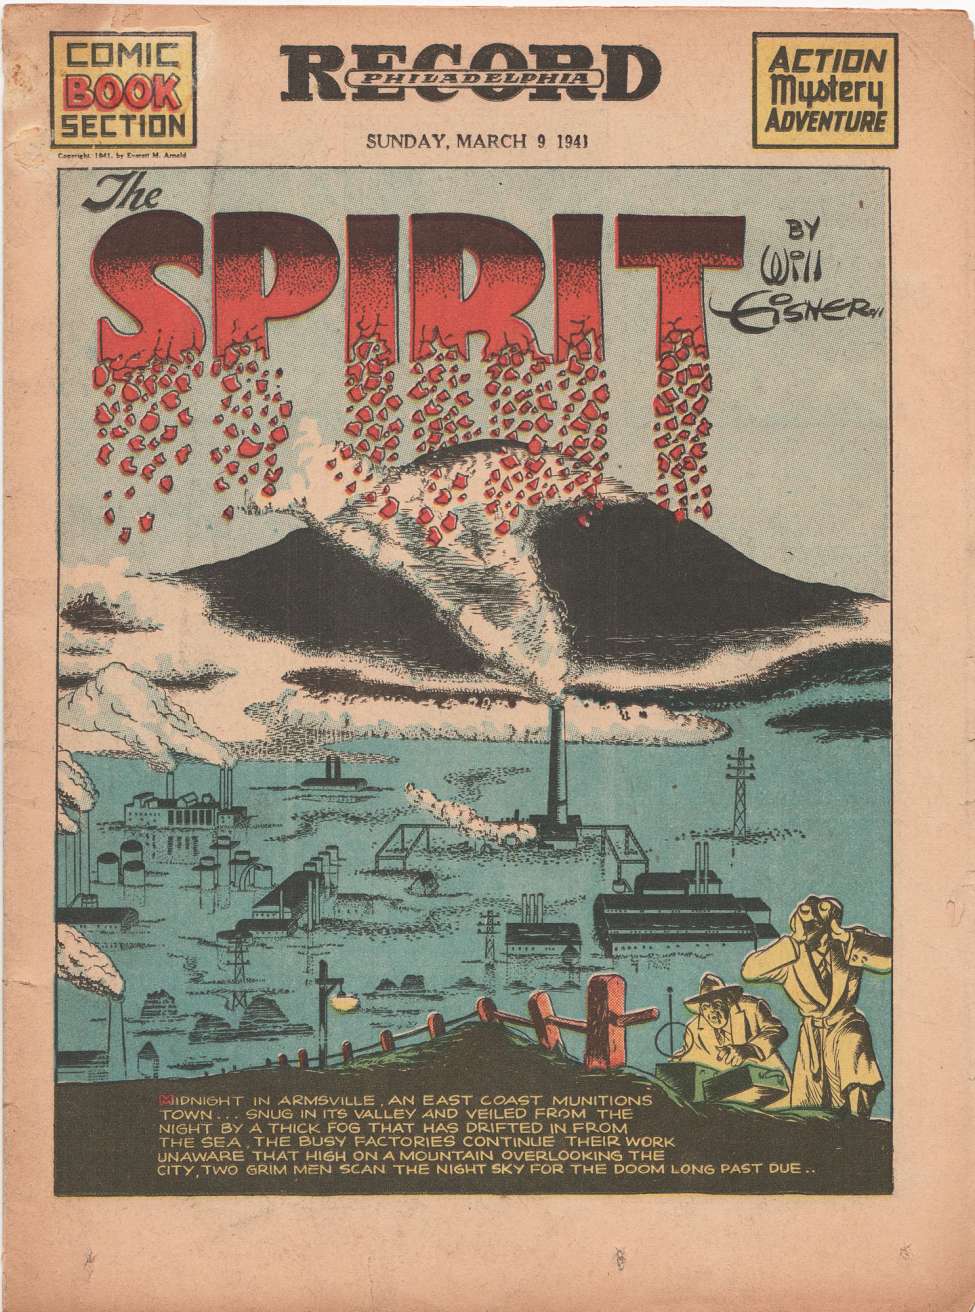 Comic Book Cover For The Spirit (1941-03-09) - Philadelphia Record